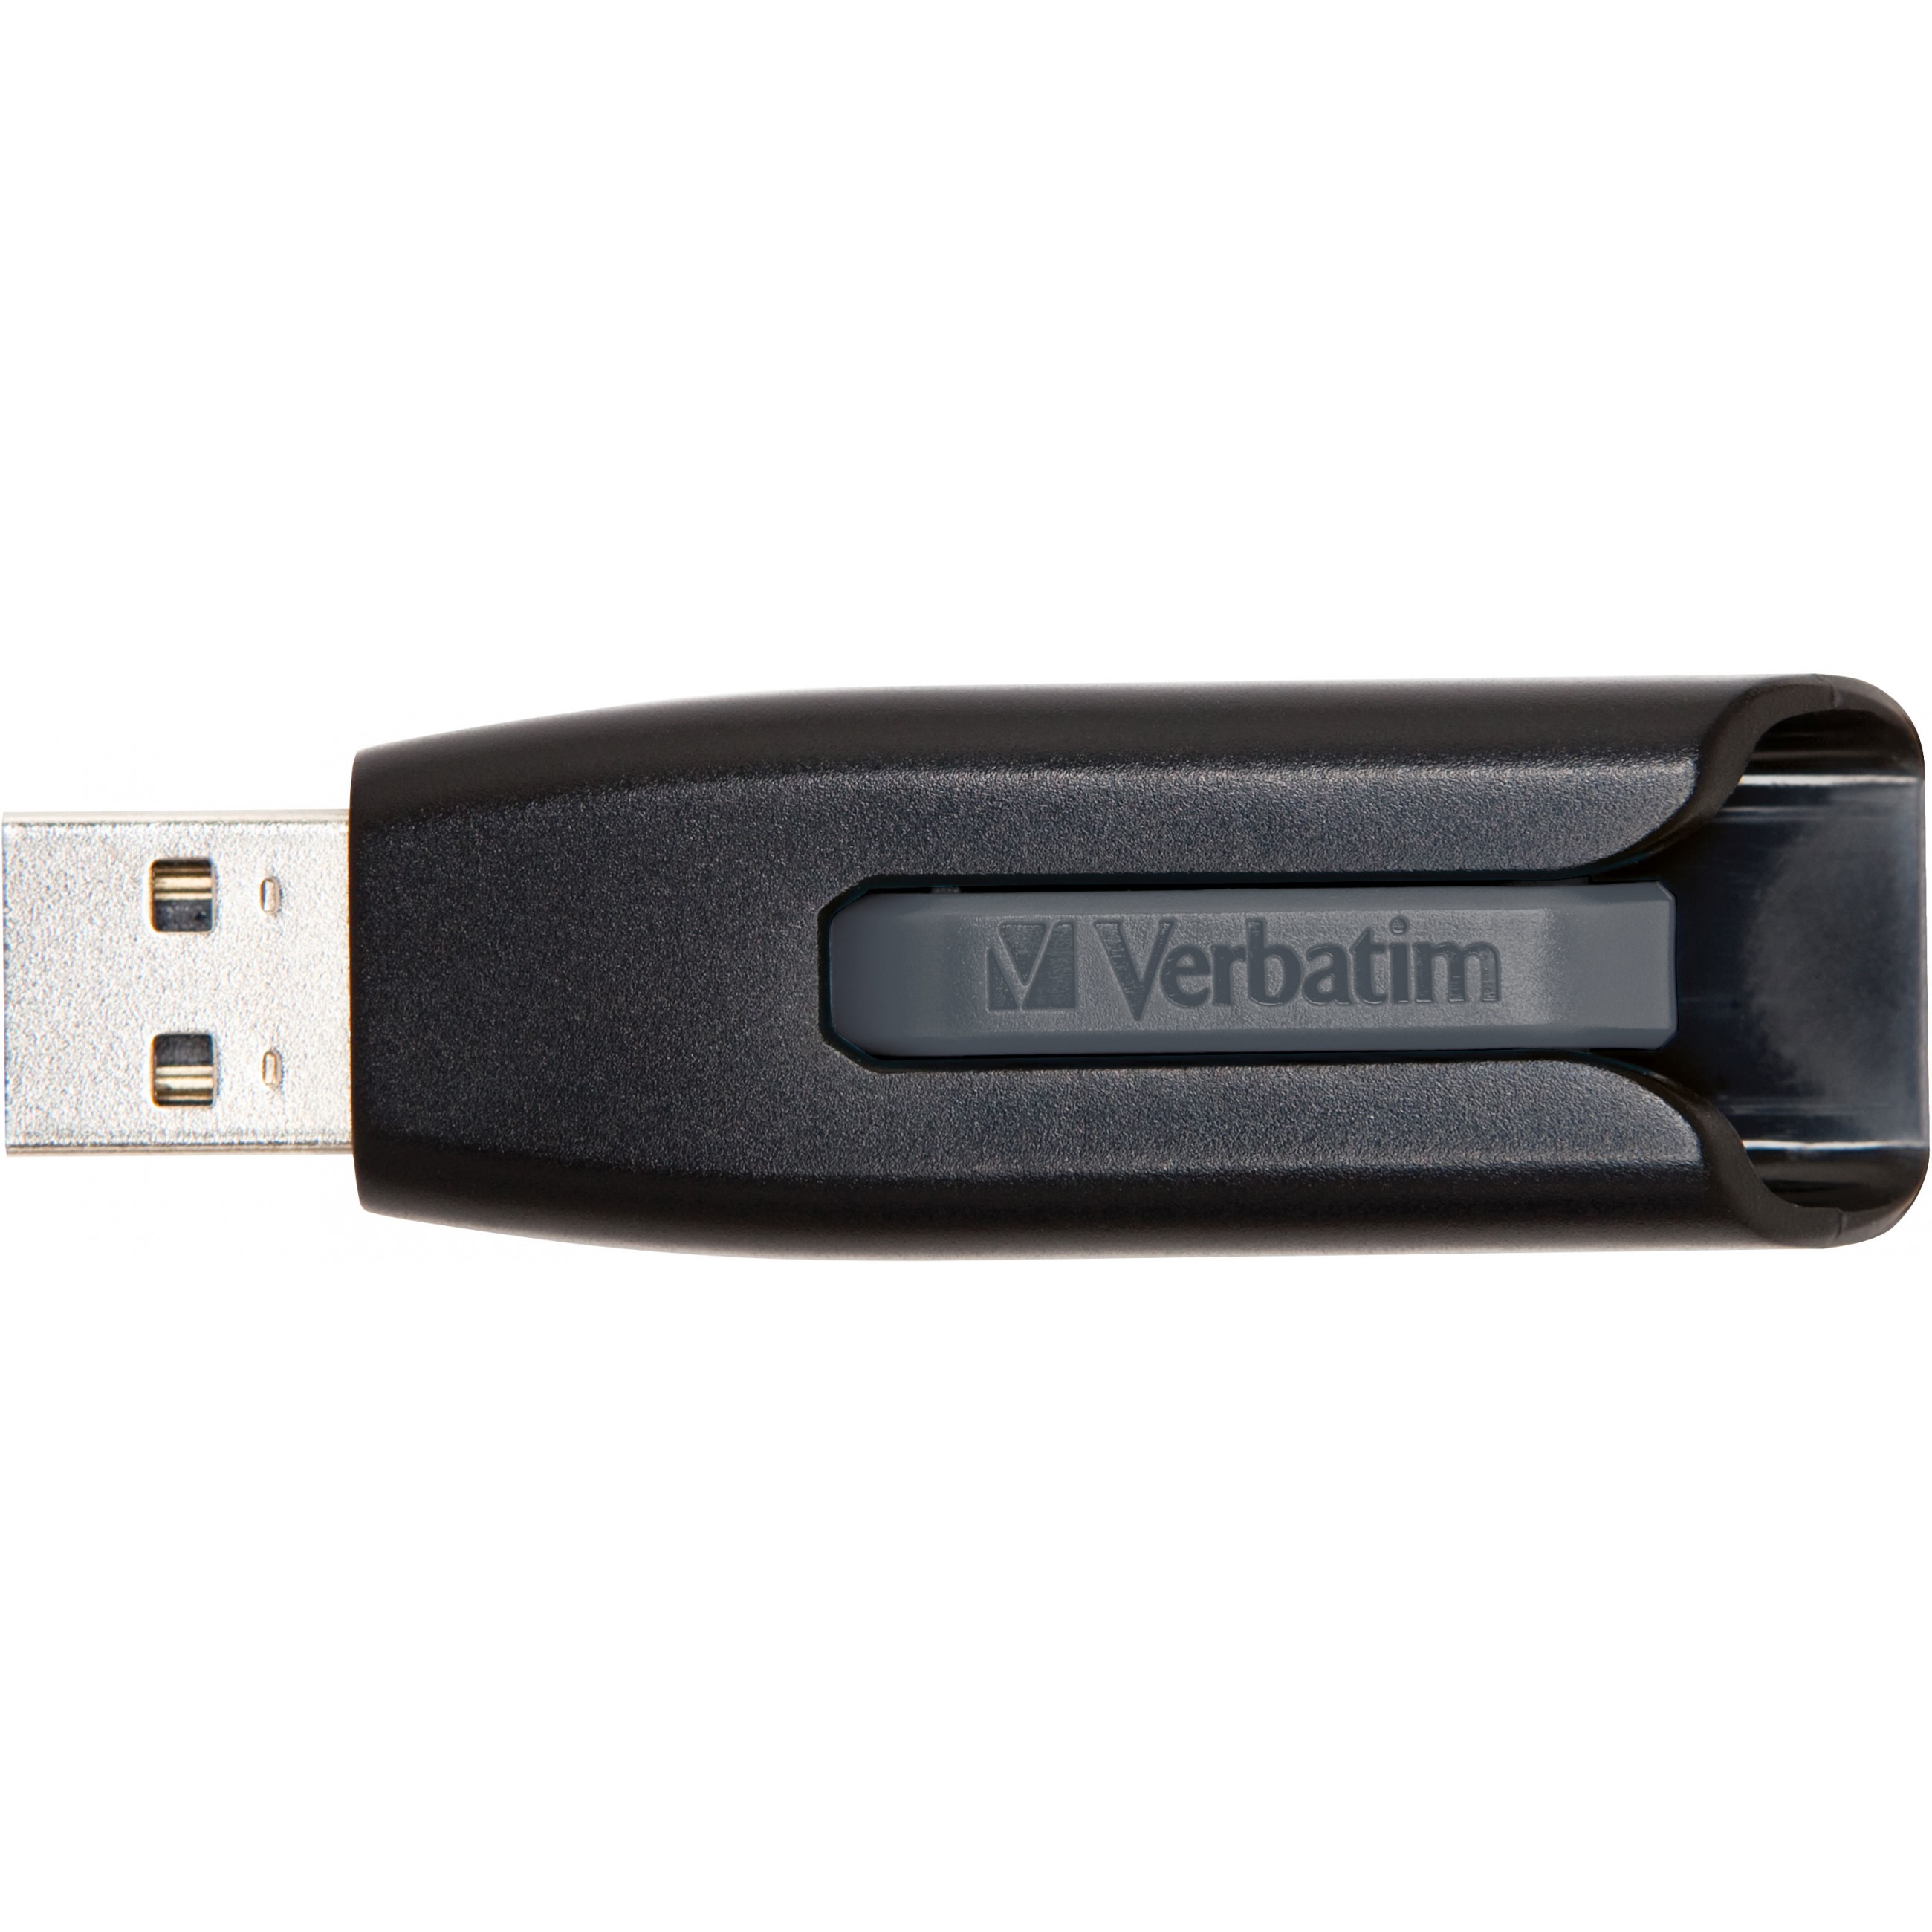 Verbatim V3 USB flash drive - 49174